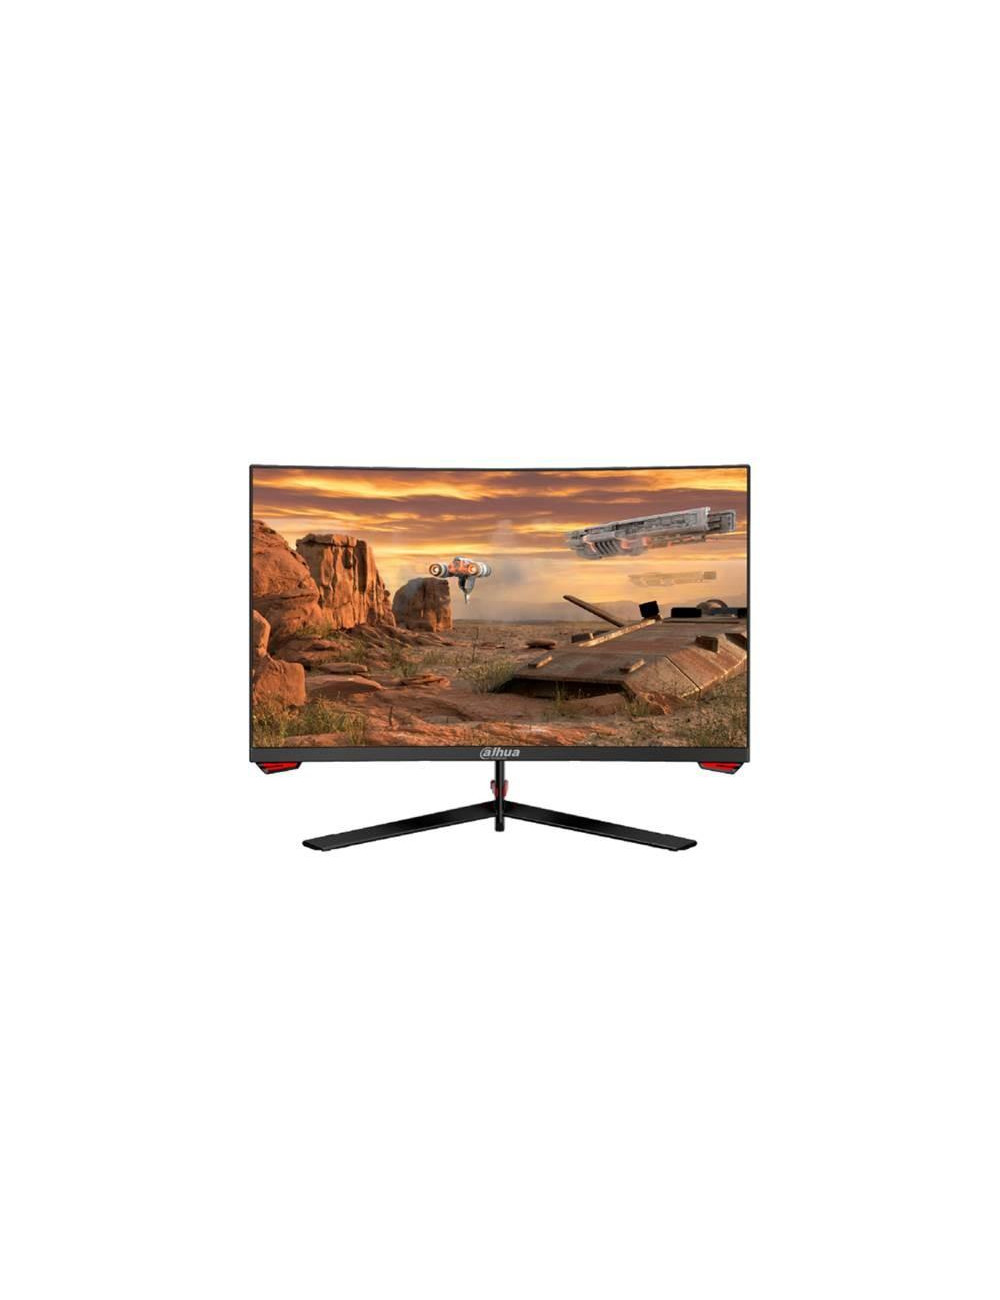 LCD Monitor|DAHUA|LM27-E230C|27"|Gaming/Curved|Panel VA|1920x1080|16:9|165Hz|1 ms|Tilt|DHI-LM27-E230C